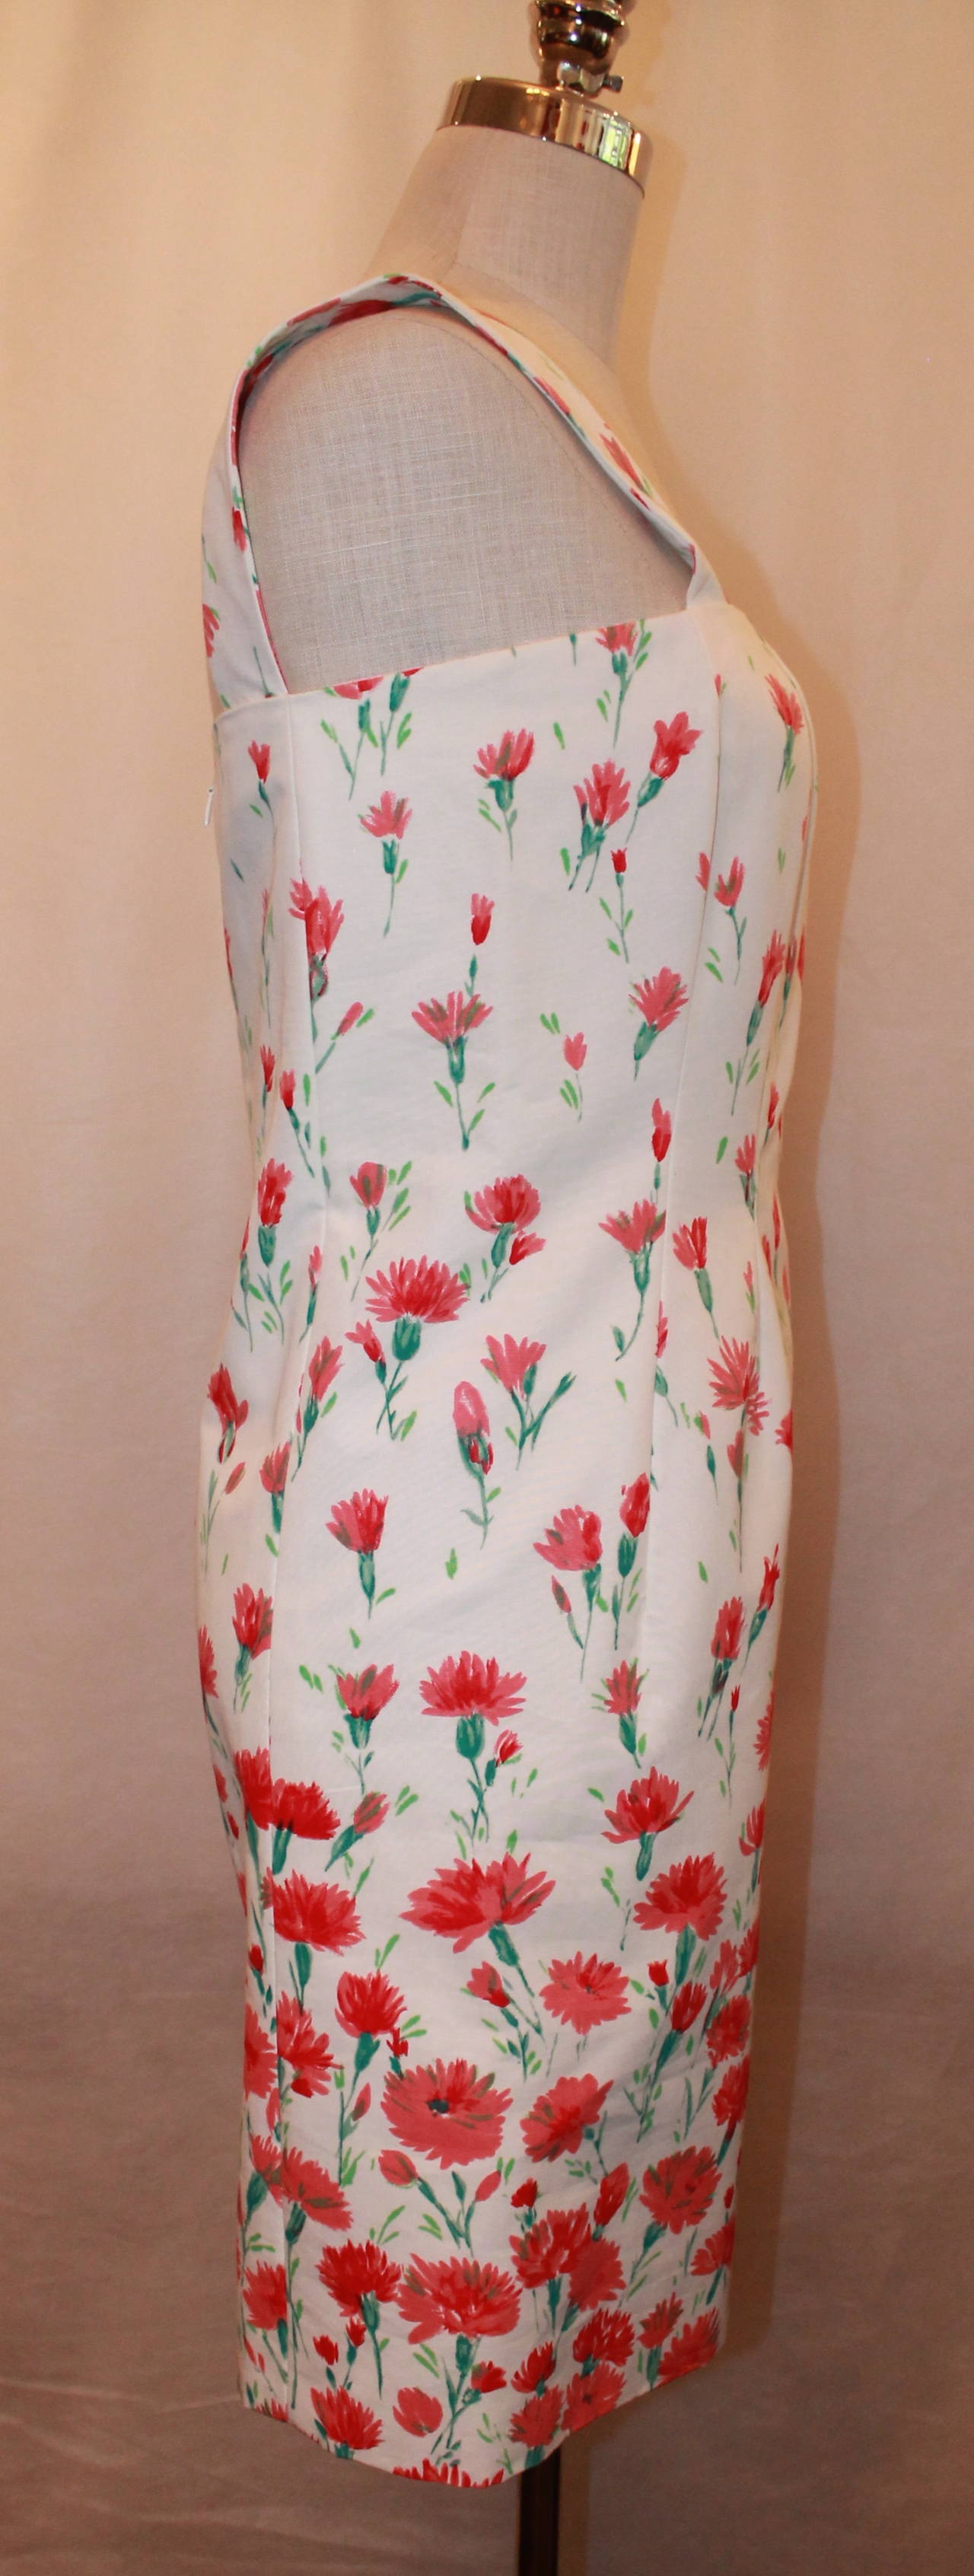 oscar de la renta white dress with red flowers